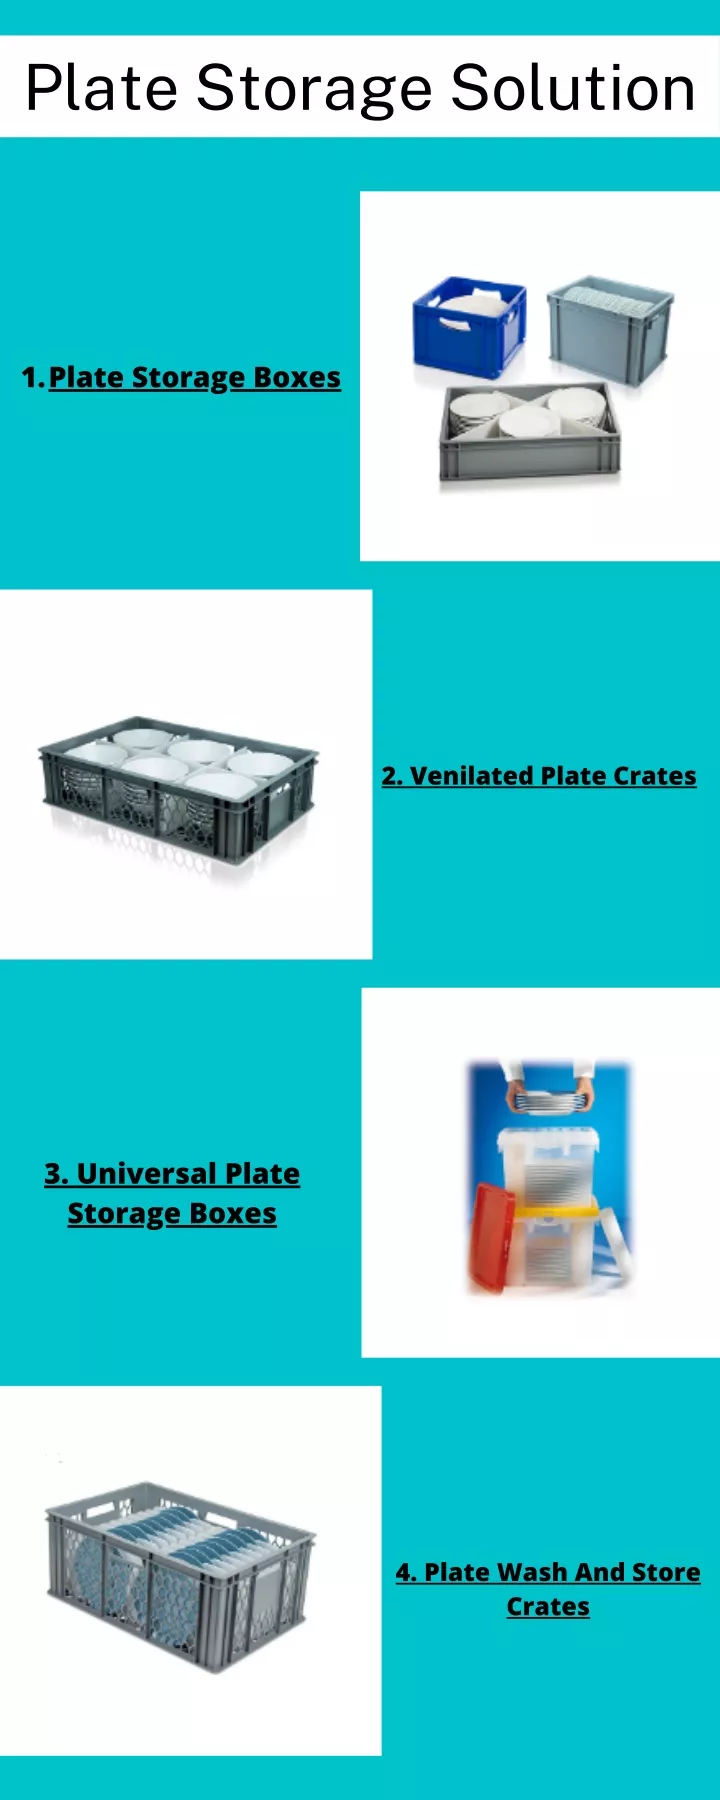 plate storage solution